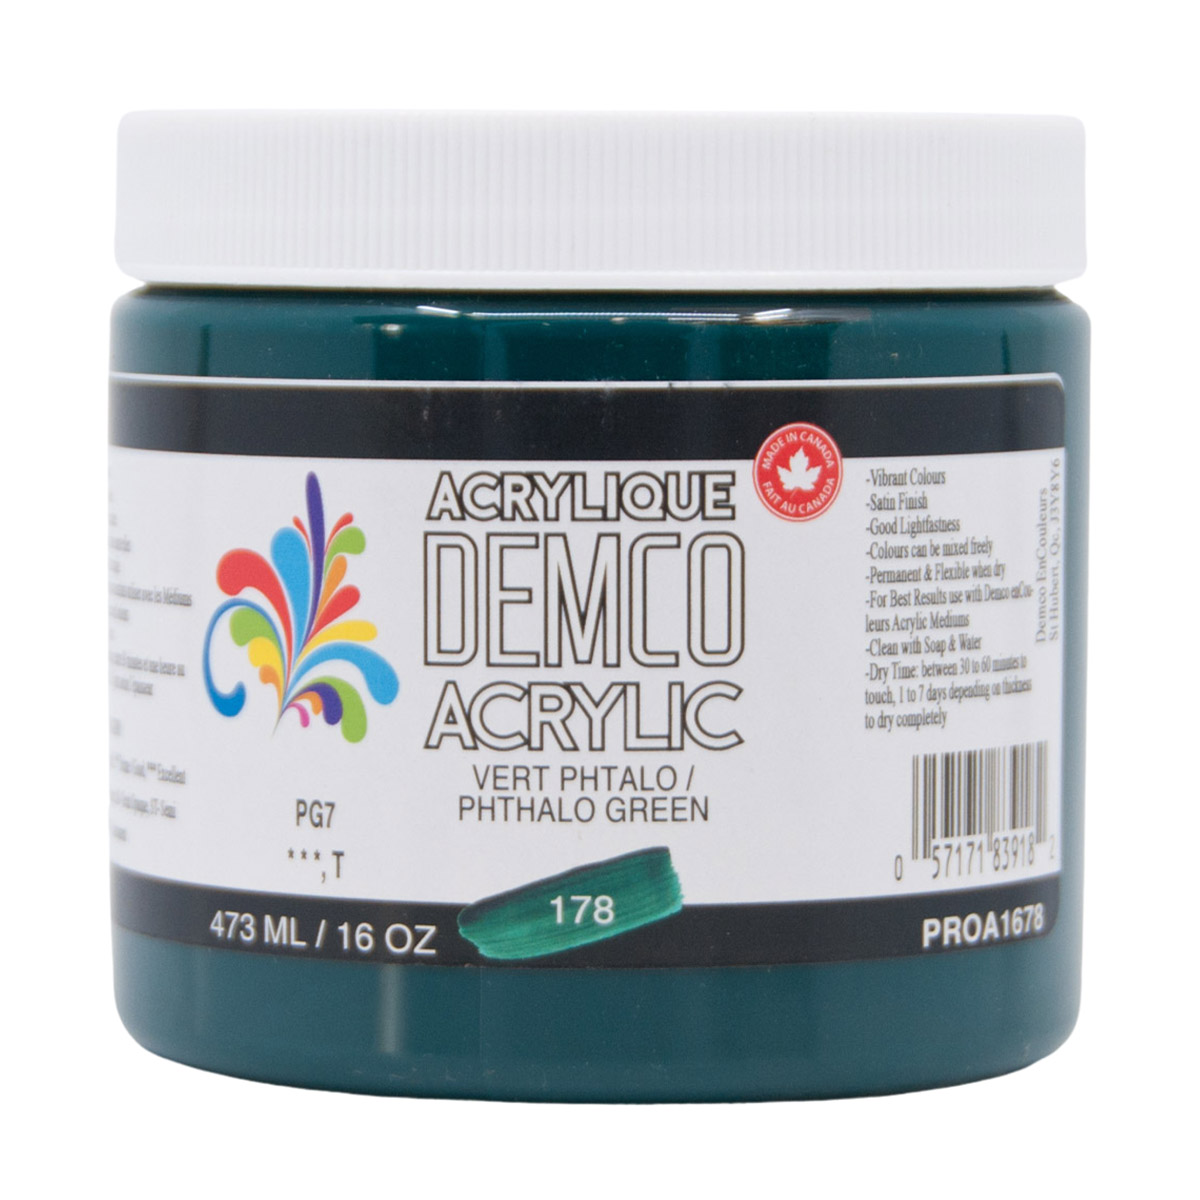 Demco Acrylic Phthalo Green 473ml/16oz